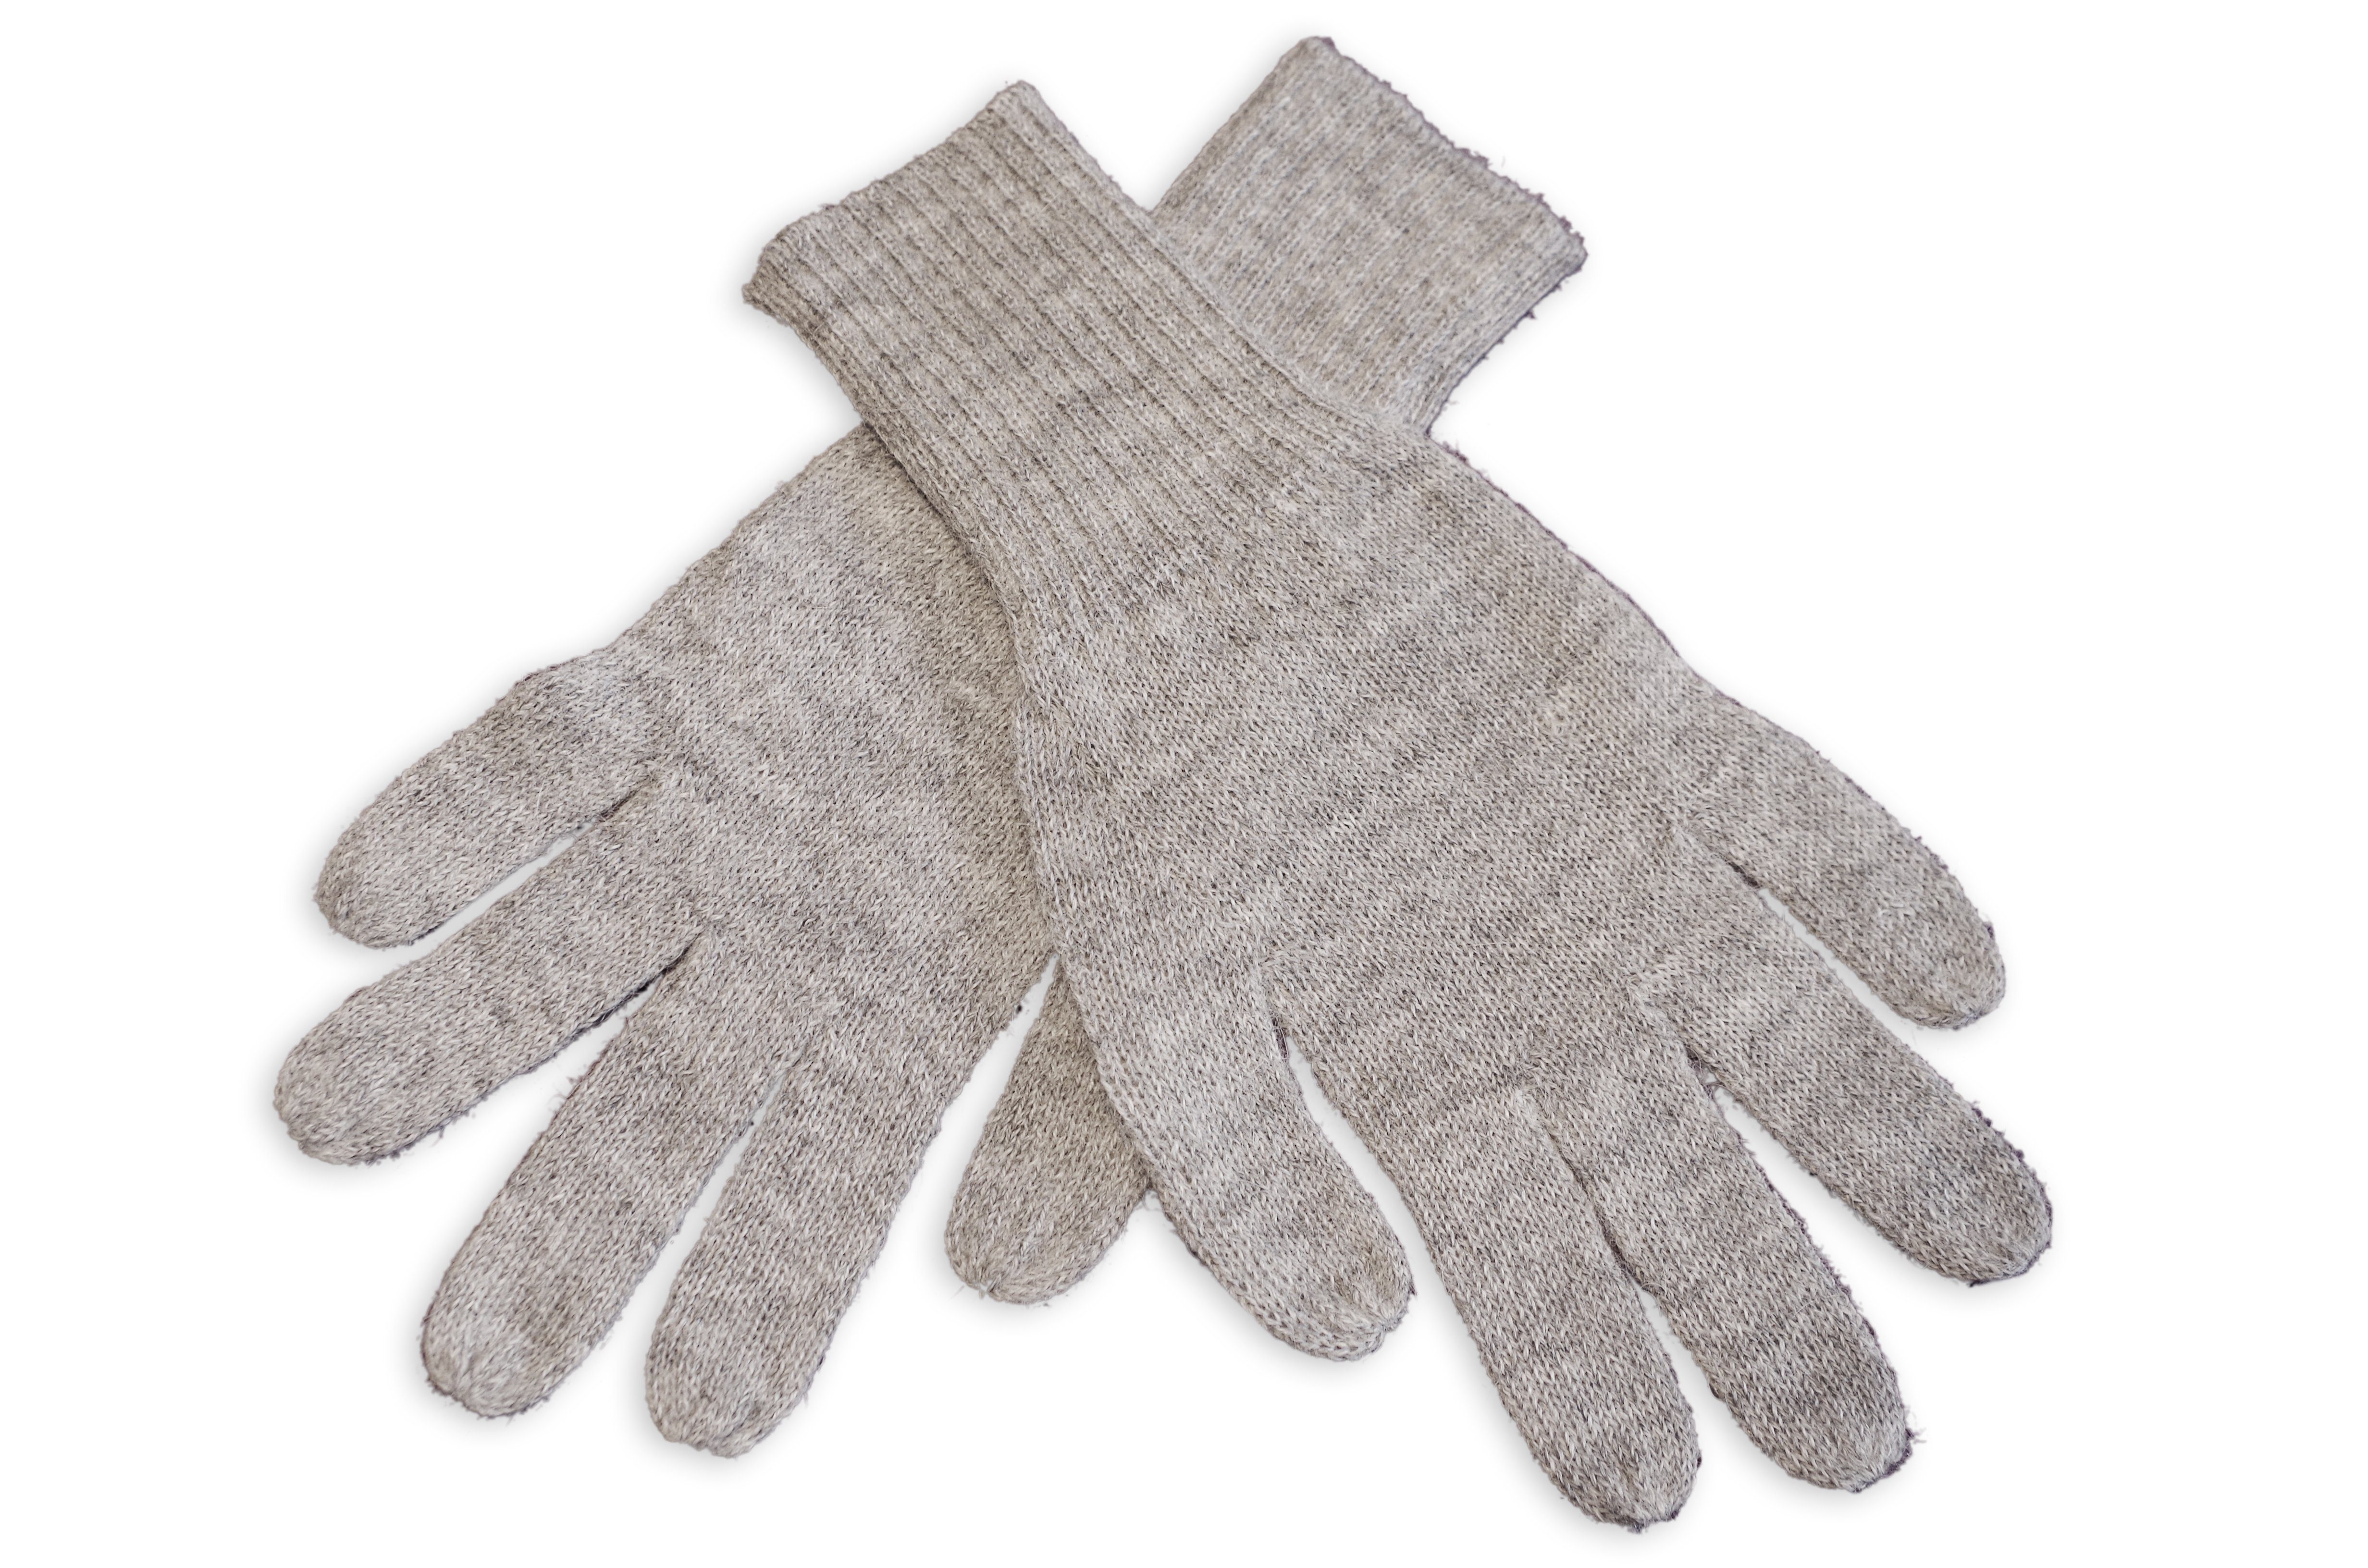 Posh Gear Strickhandschuhe Guantino Alpaka Fingerhandschuhe aus 100% Alpakawolle hell grau | Wollhandschuhe